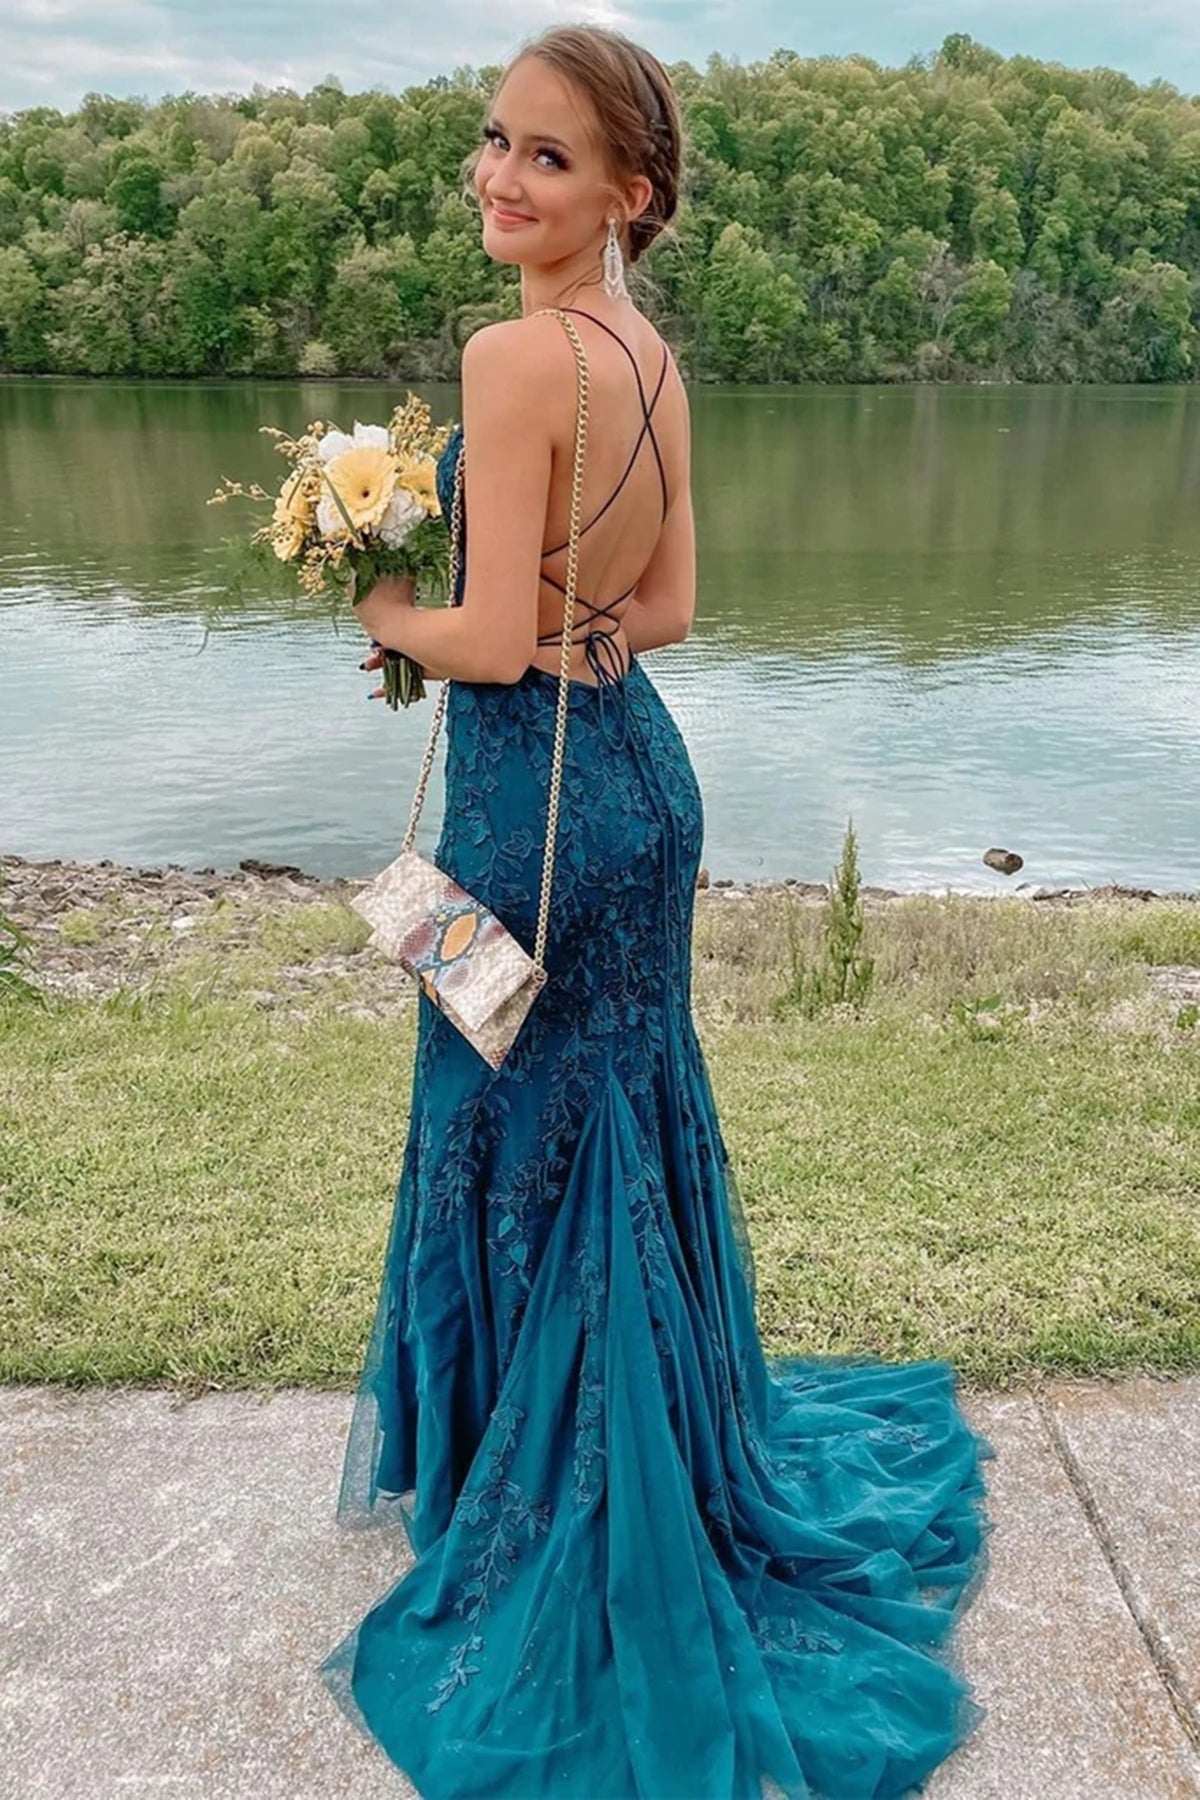 modest prom dress